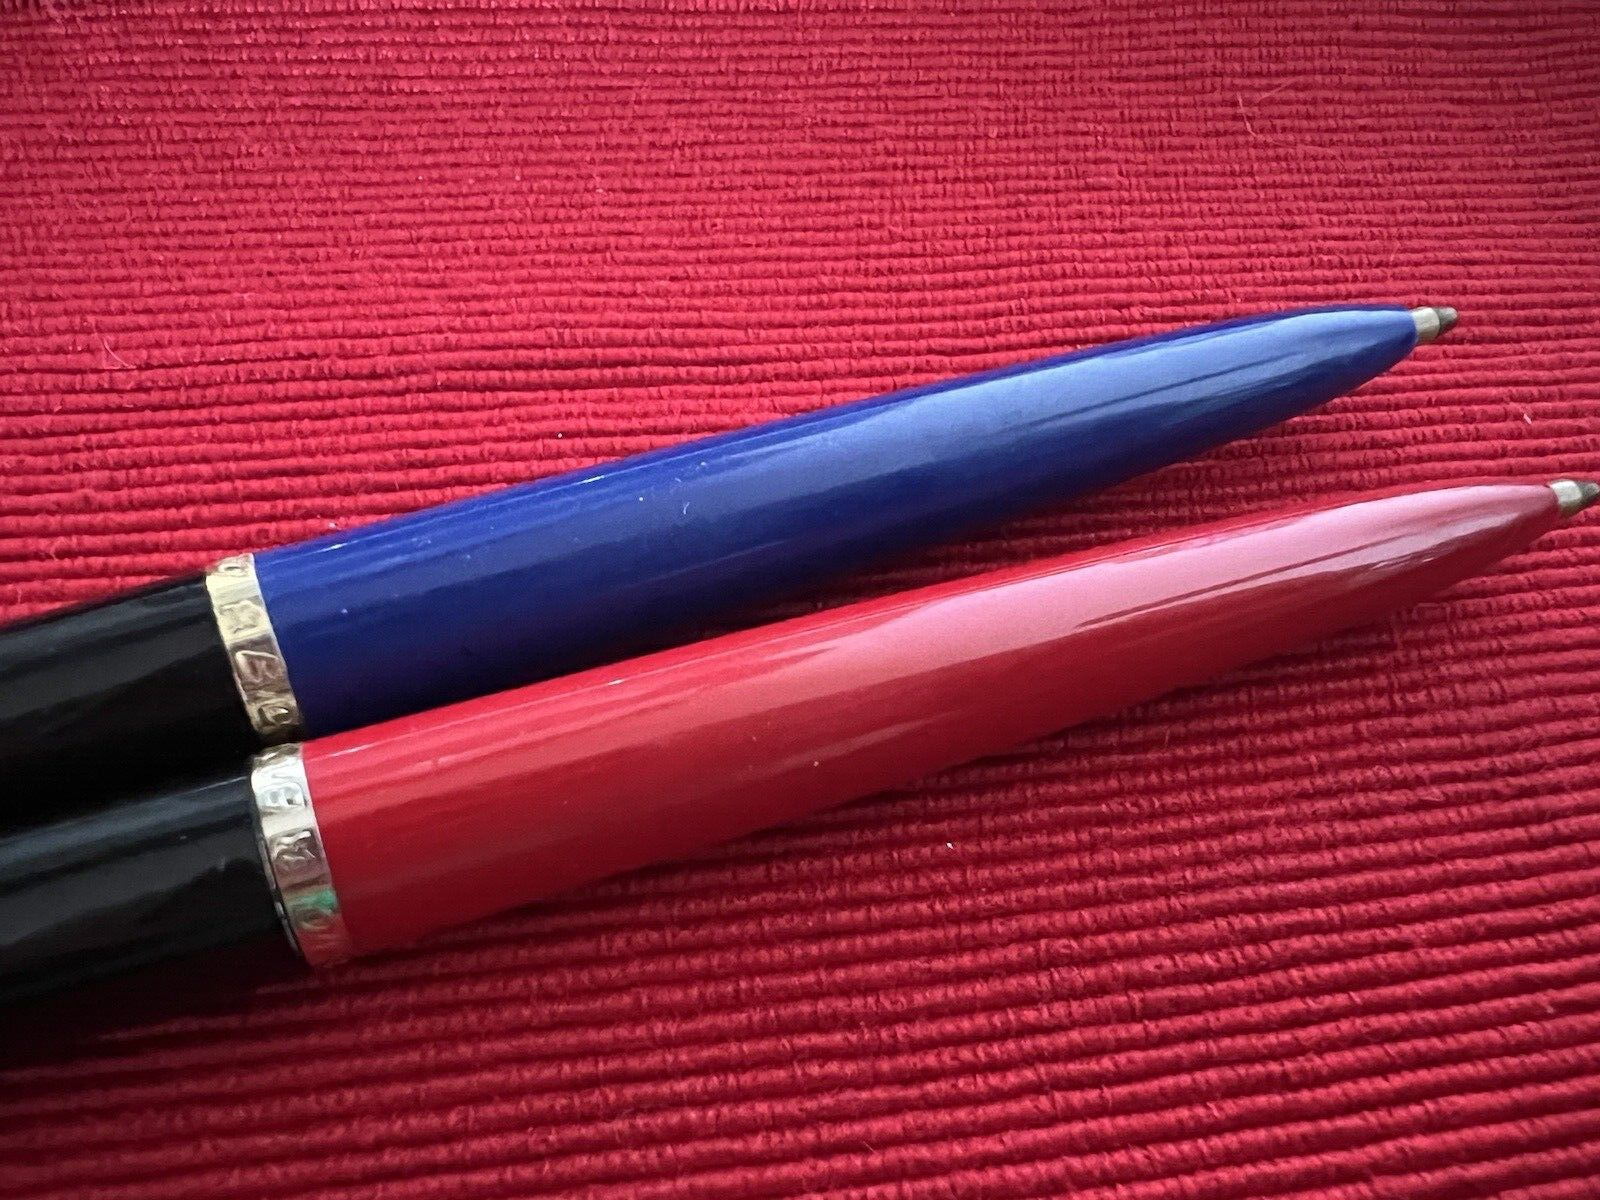 Bic Pens Penholder Sphere Corps Elongated Black Red Blue Vintage